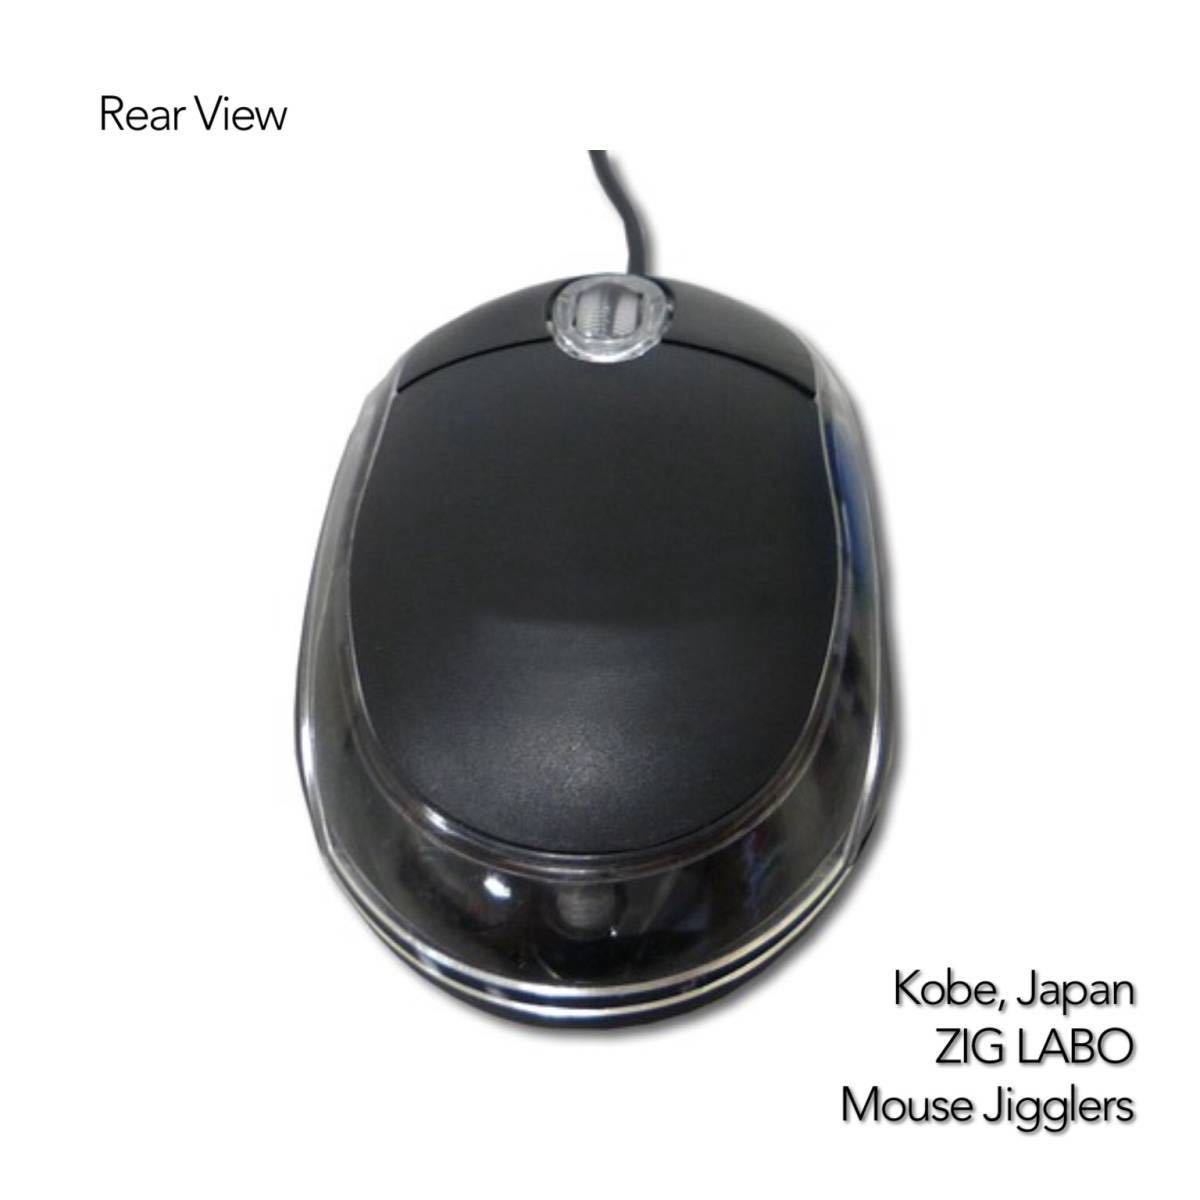 USBマウス 有線 光学式 USB Wired Optical Mouse #3 在宅勤務 テレワーク リモートワーク 遠隔授業 リモート授業_画像4